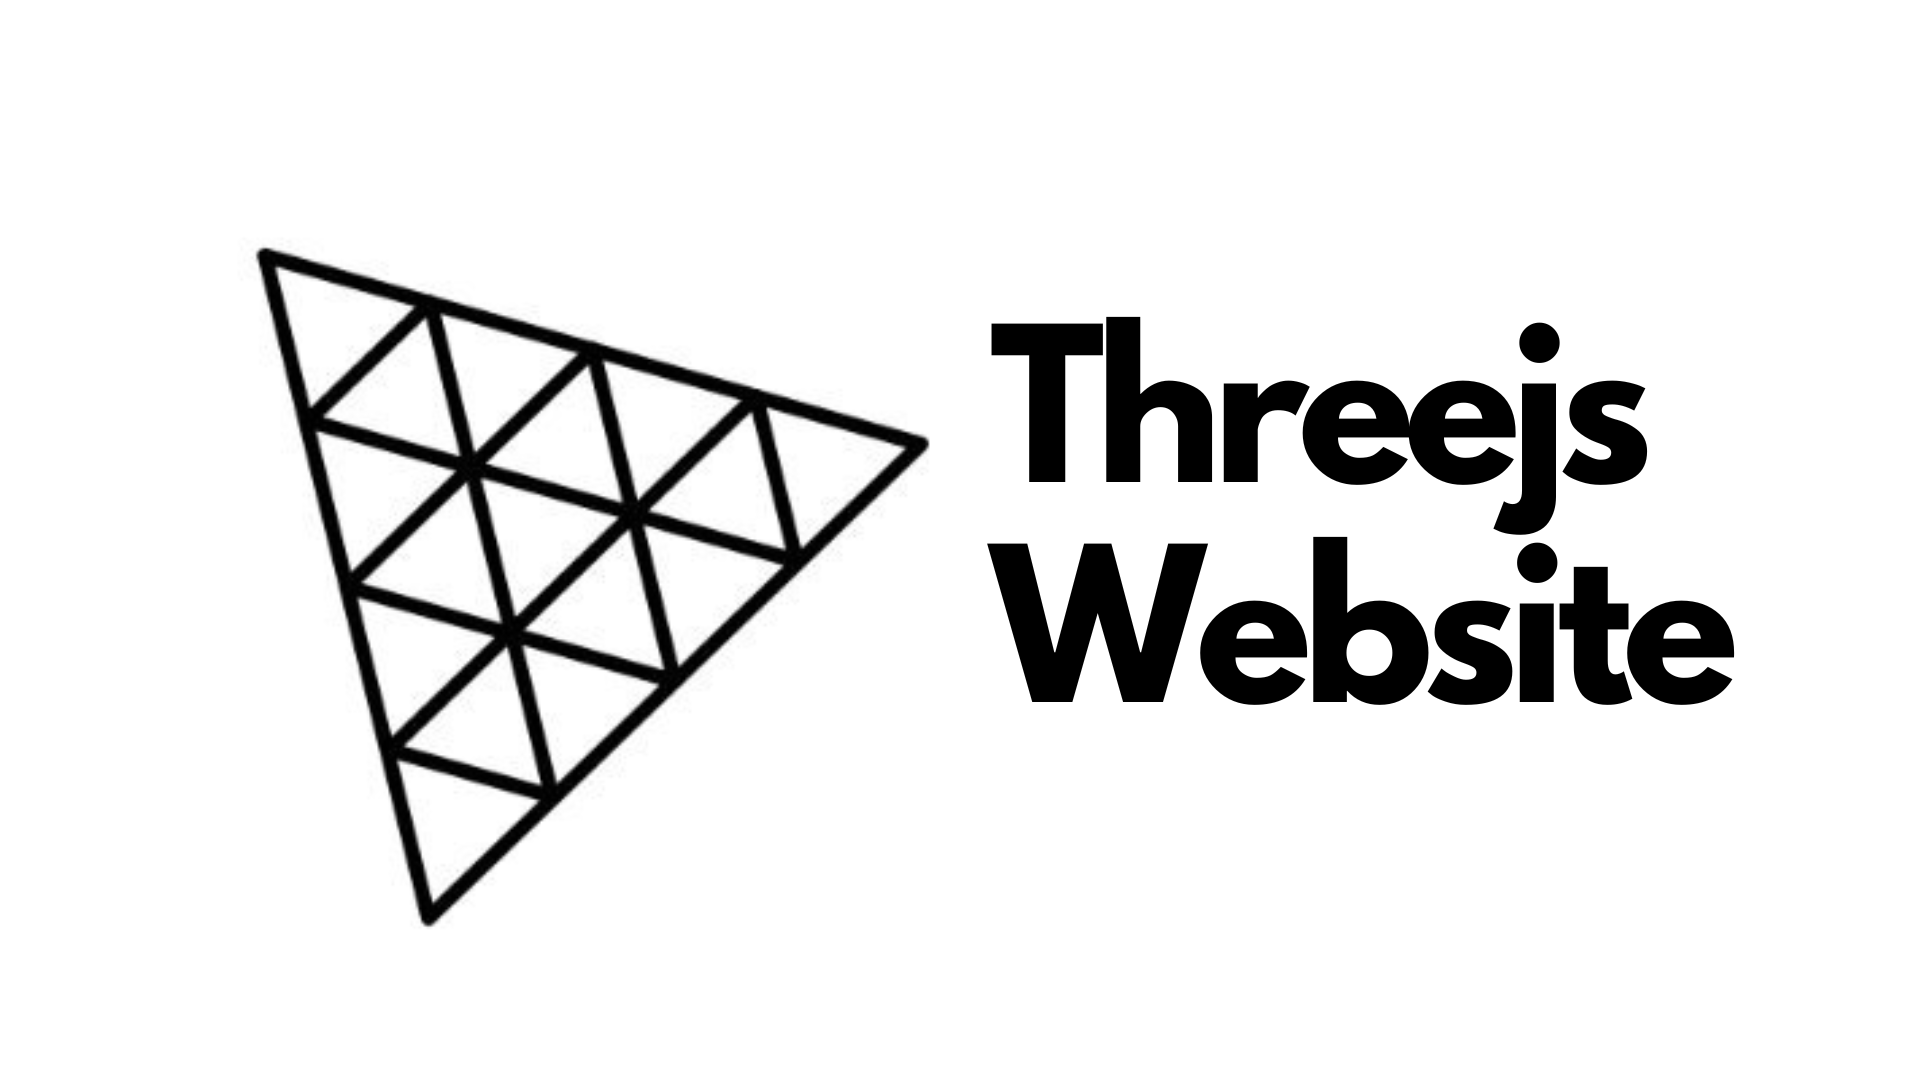 Threejs website